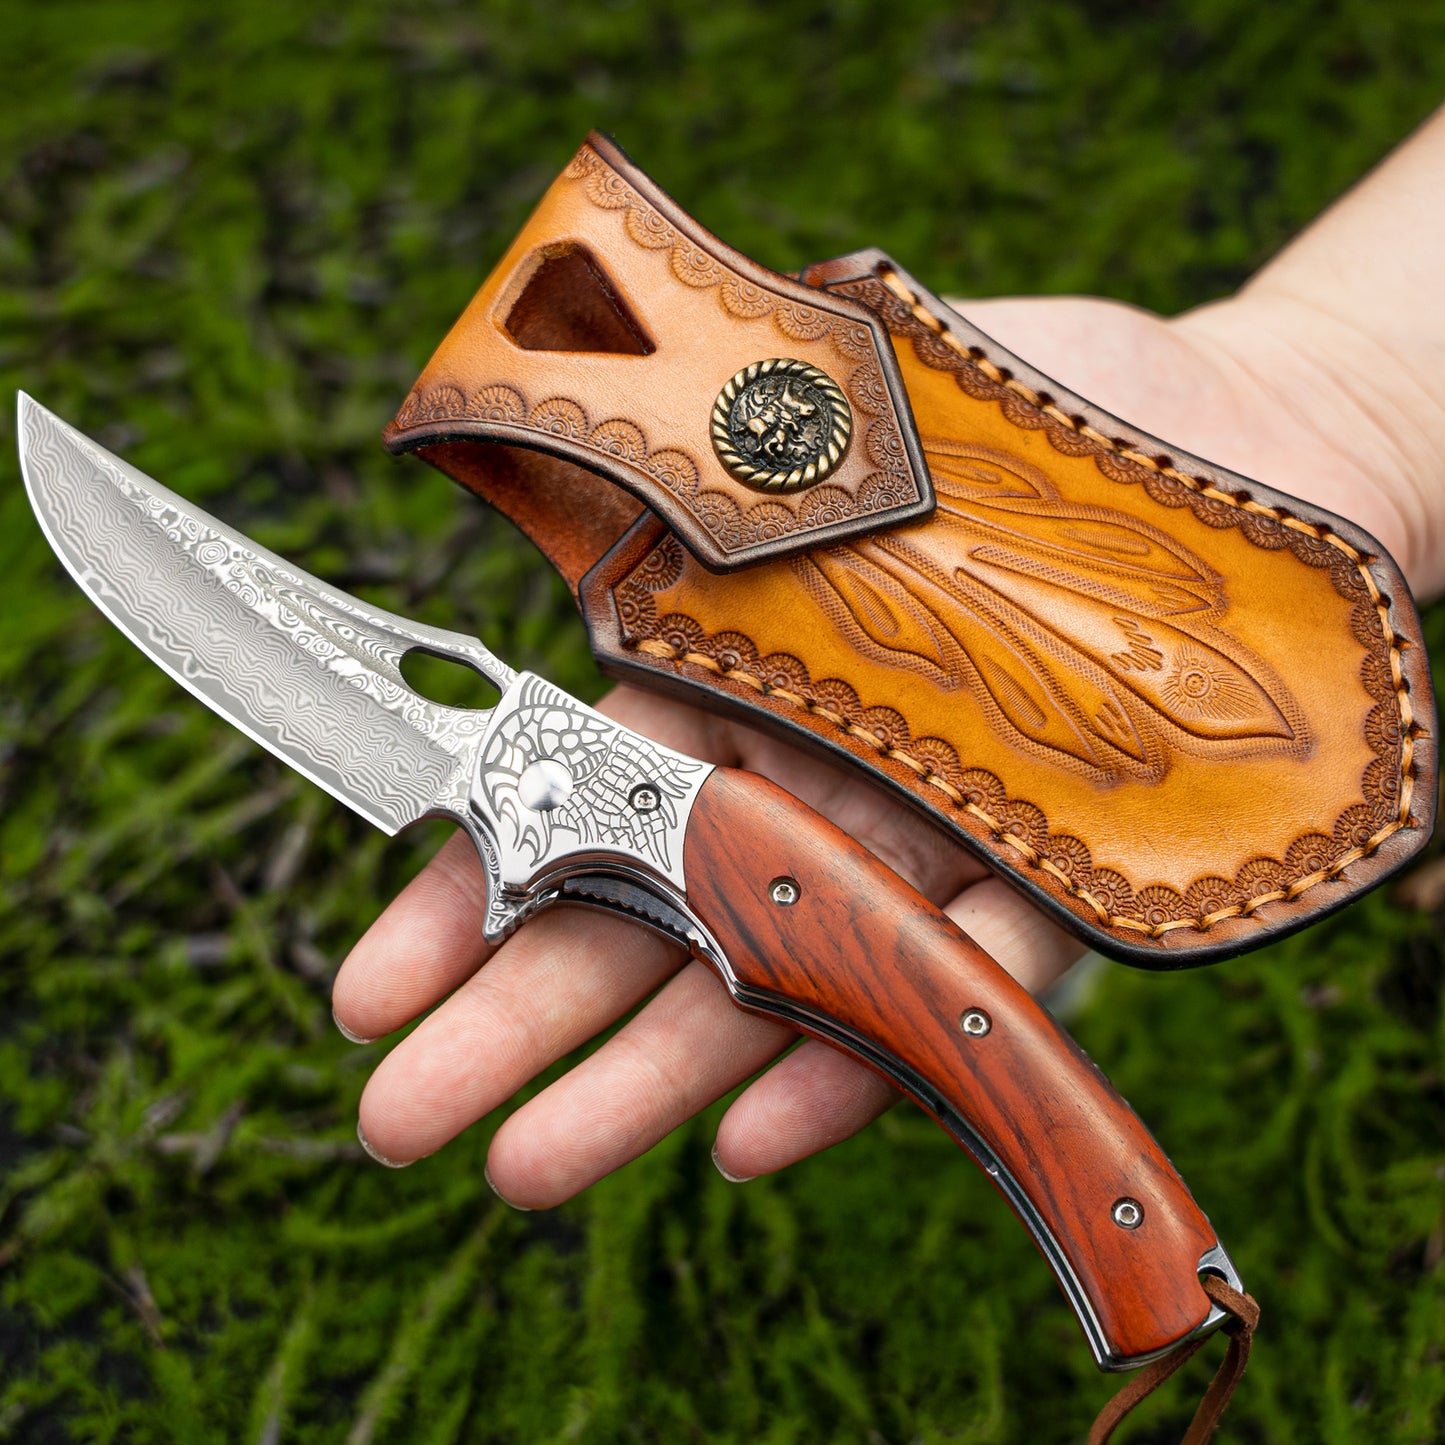 LOTHAR KRAKEN Damascus Pocket Knife, 3 inch VG10 Damascus Blade Folding Knife with Retro Leather Sheath, Sandalwood Handle, Perfect Gifts for Men or Women